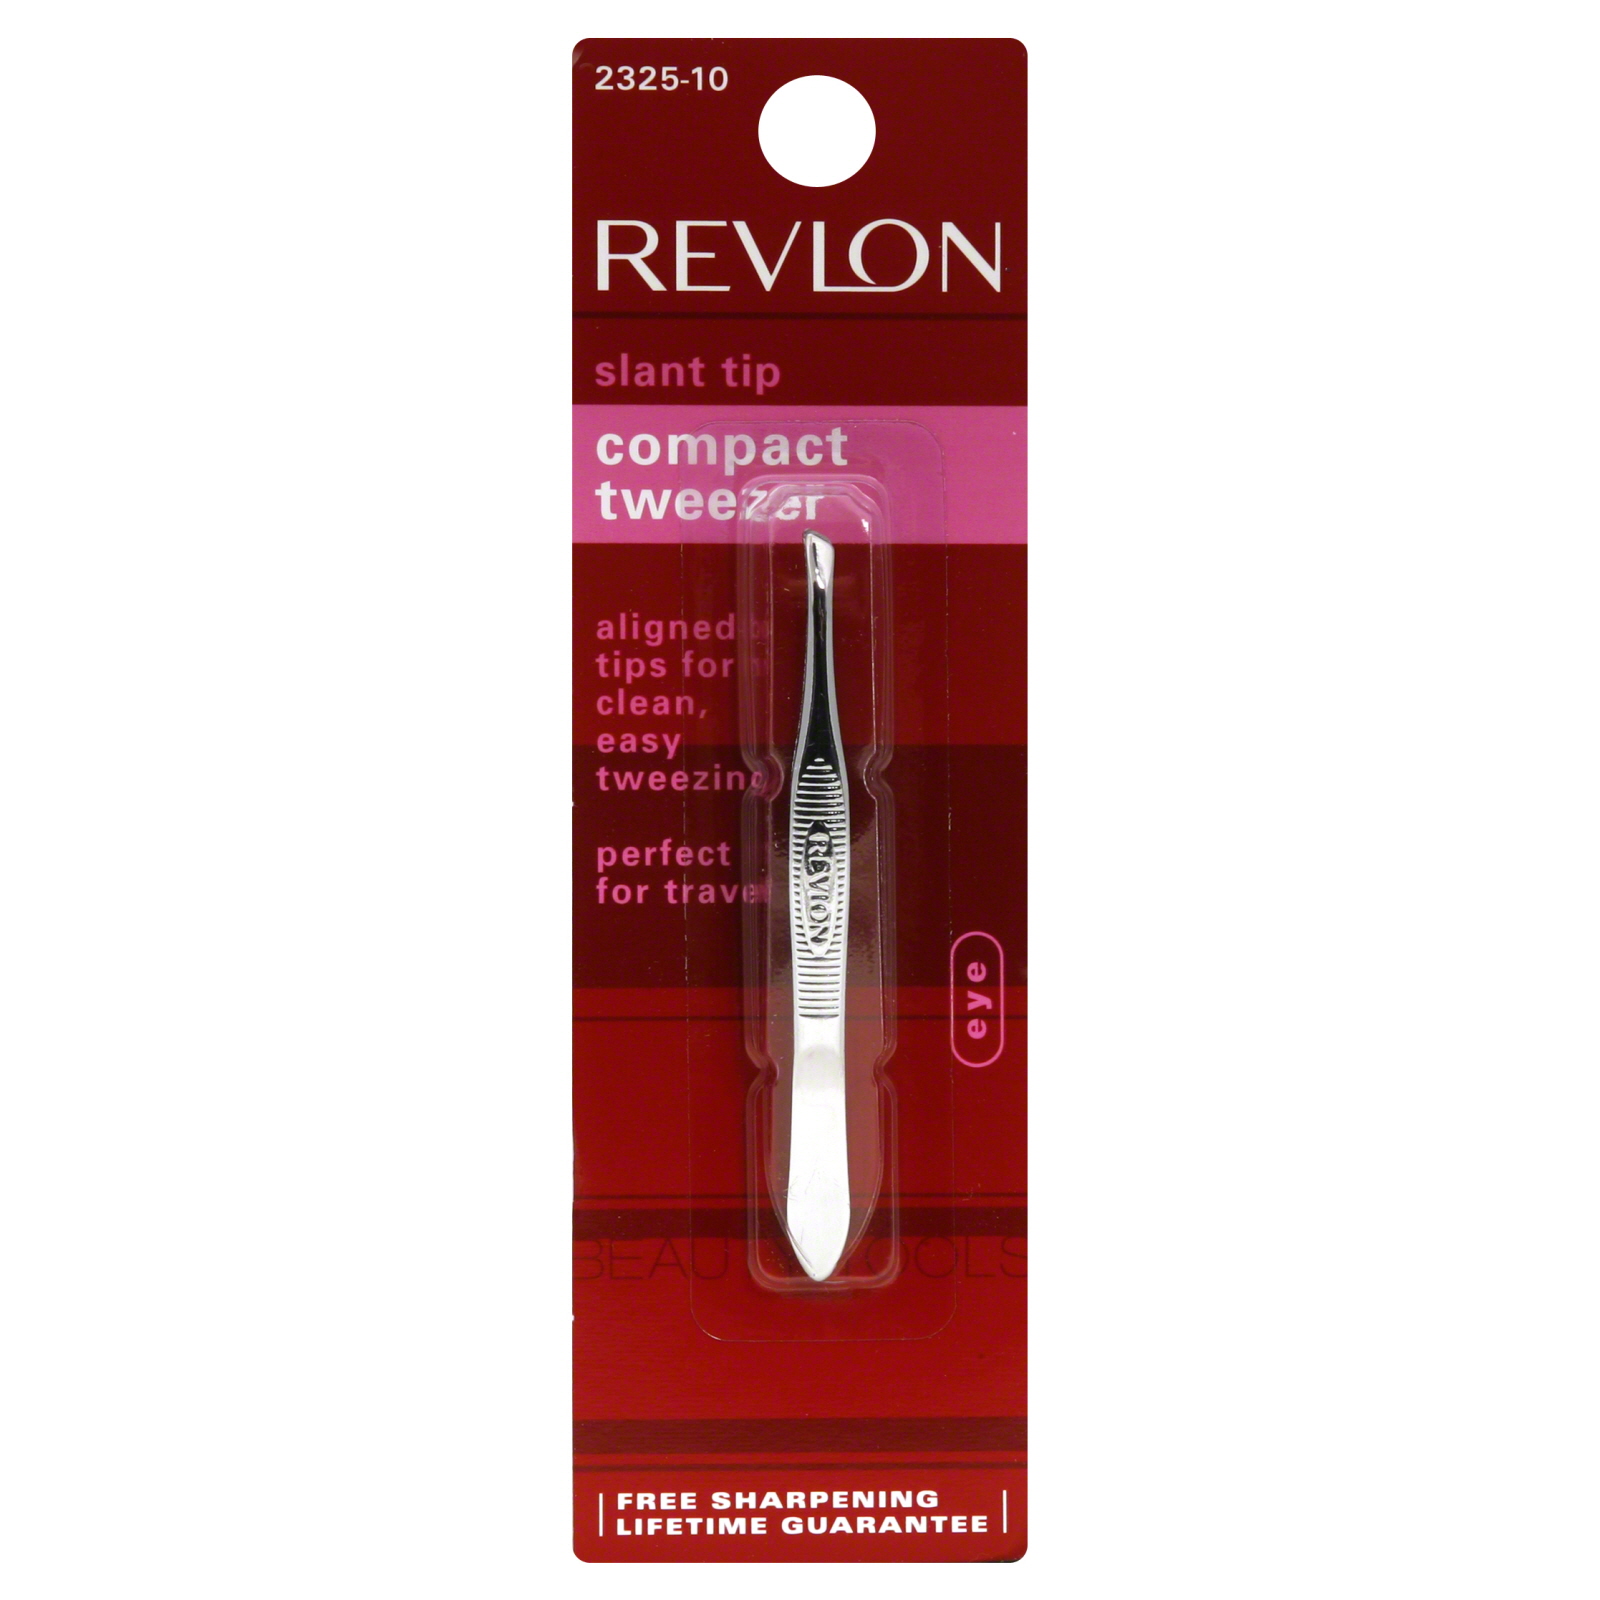 Revlon Compact Tweezer, Slant Tip, 1 each